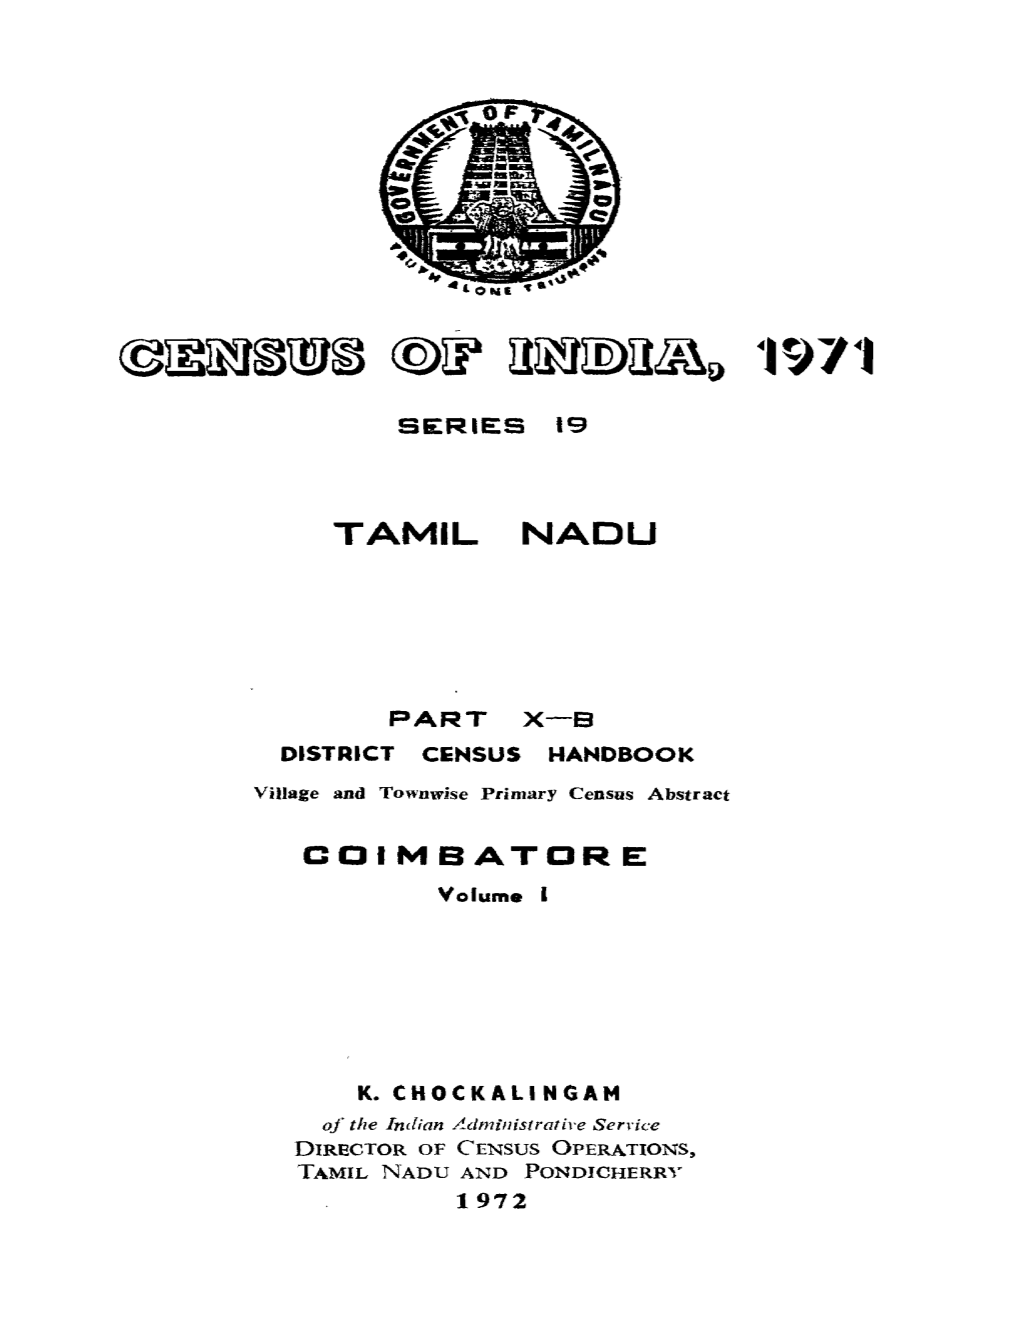 District Census Handbook, Coimbatore, Part X-B, Vol-I, Series-19